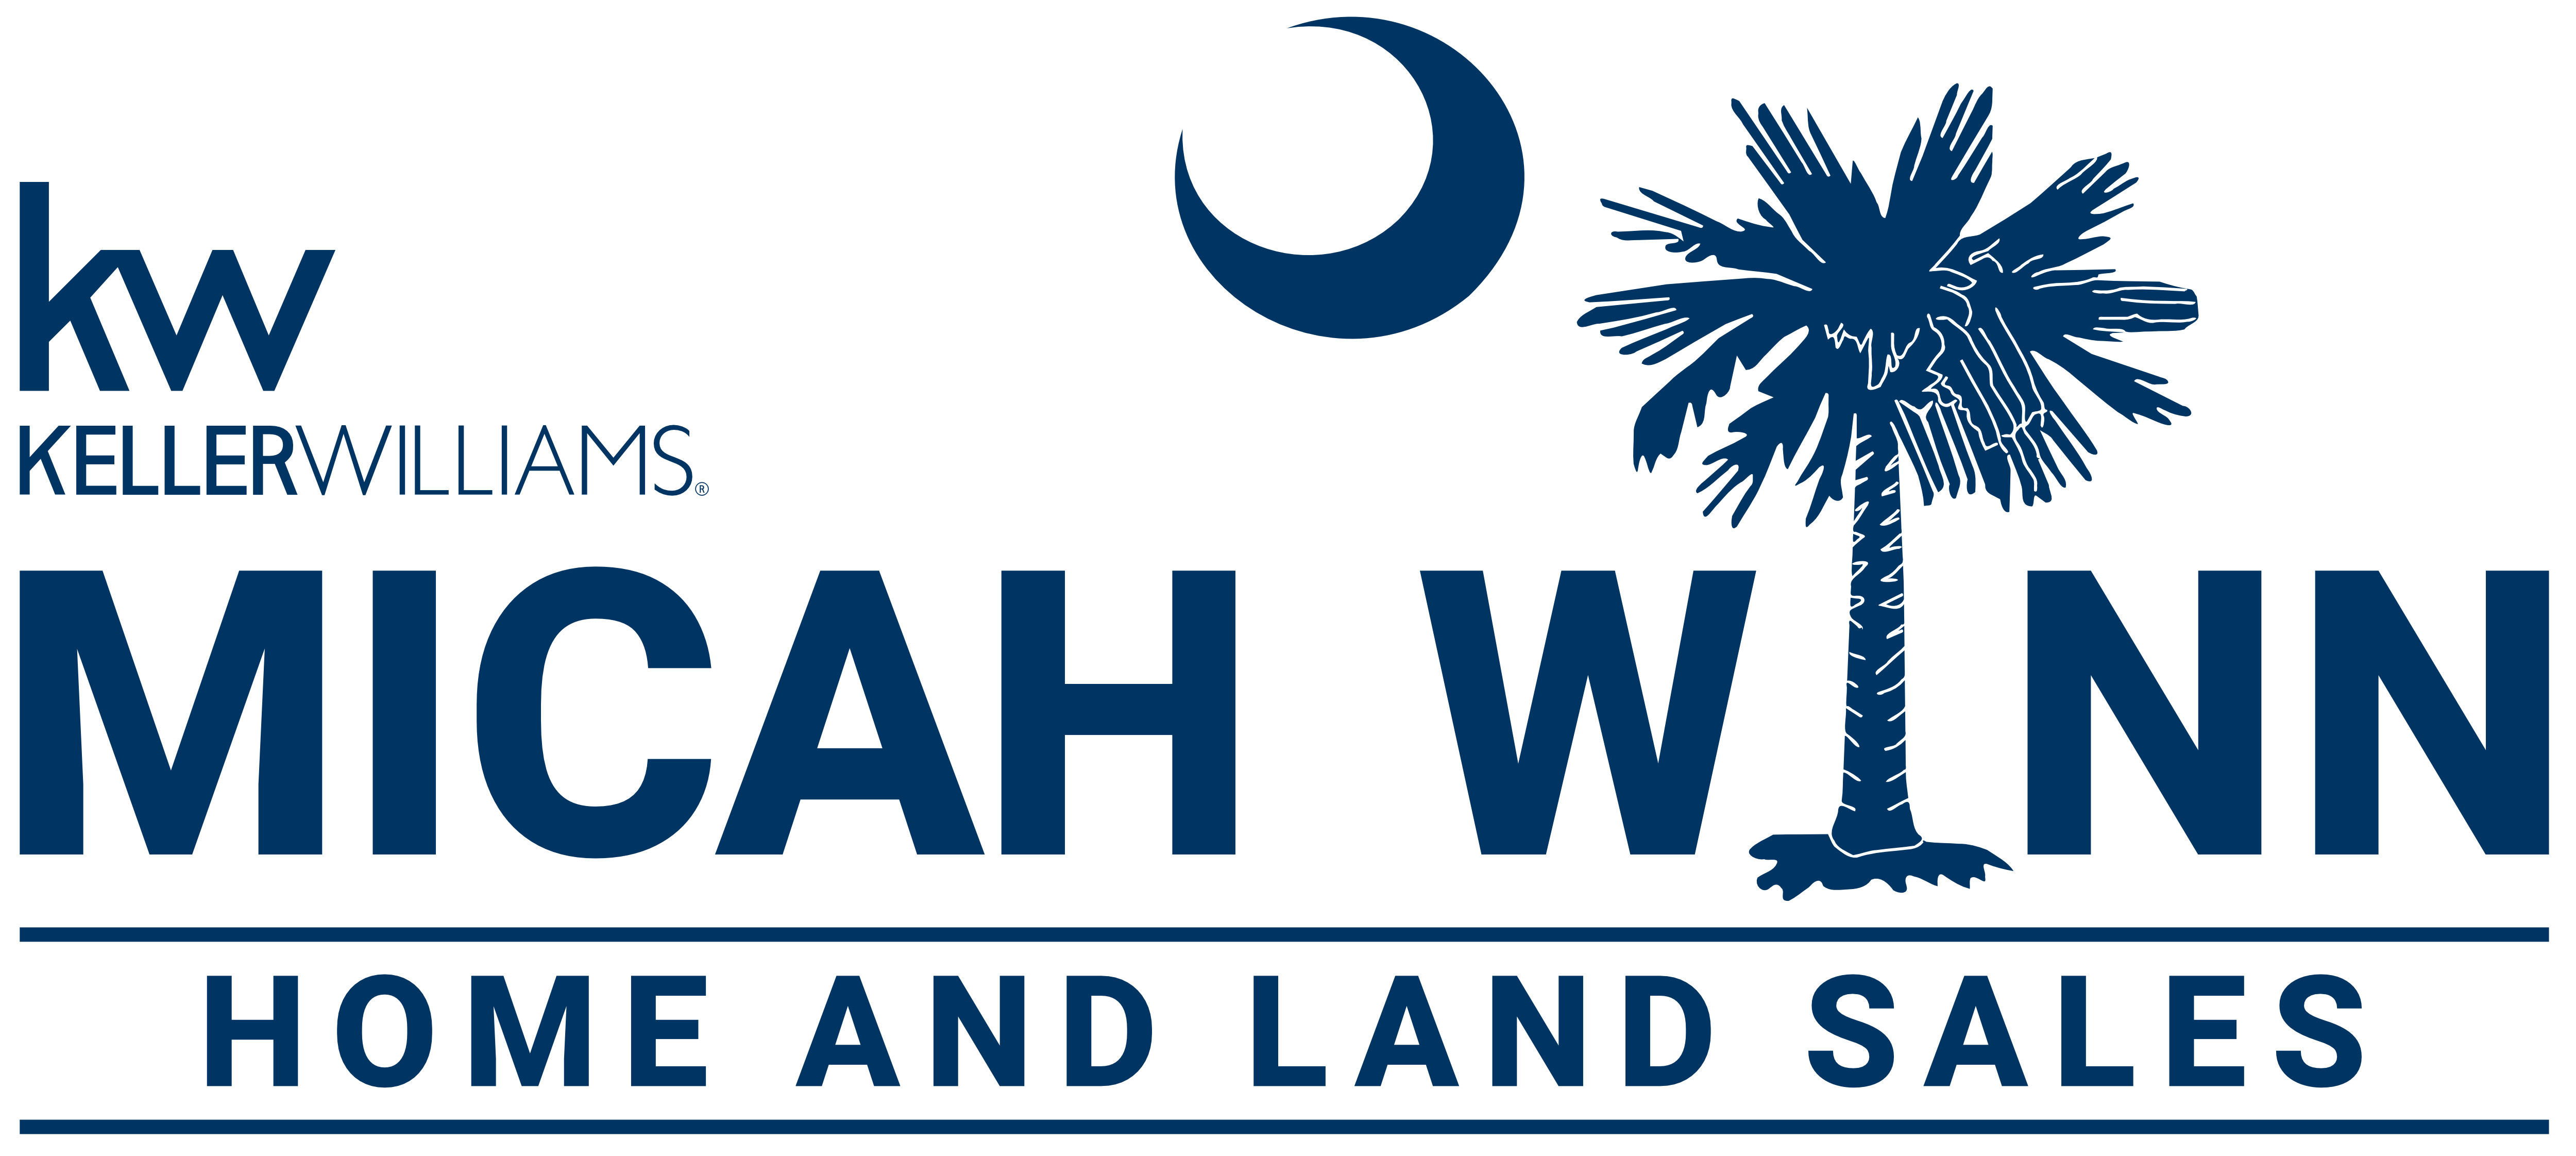 Micah Winn Home and Land Sales at Keller Williams Connected